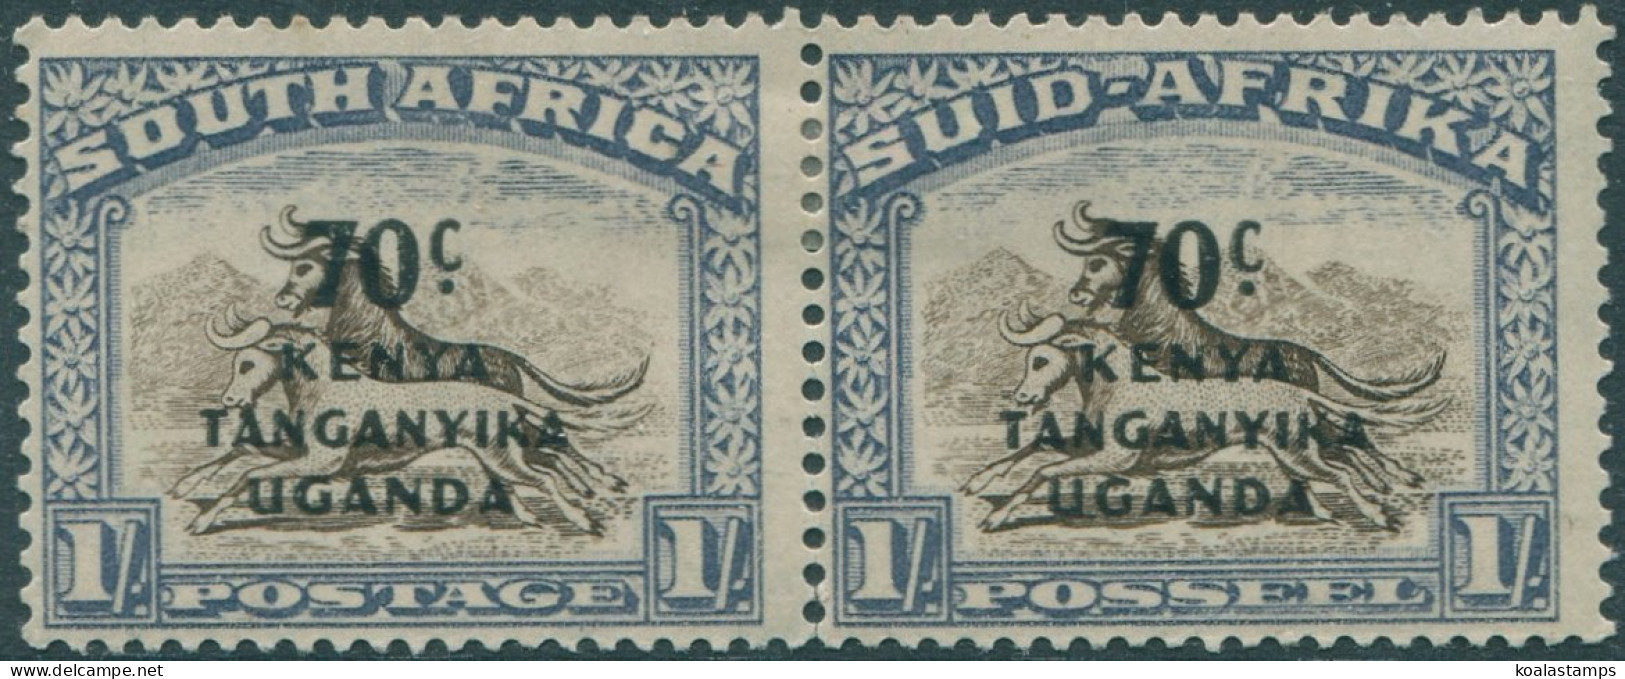 Kenya Uganda And Tanganyika 1941 SG154 70c Ovpt On 1s Brown And Blue SA Pair MH - Kenya, Uganda & Tanganyika